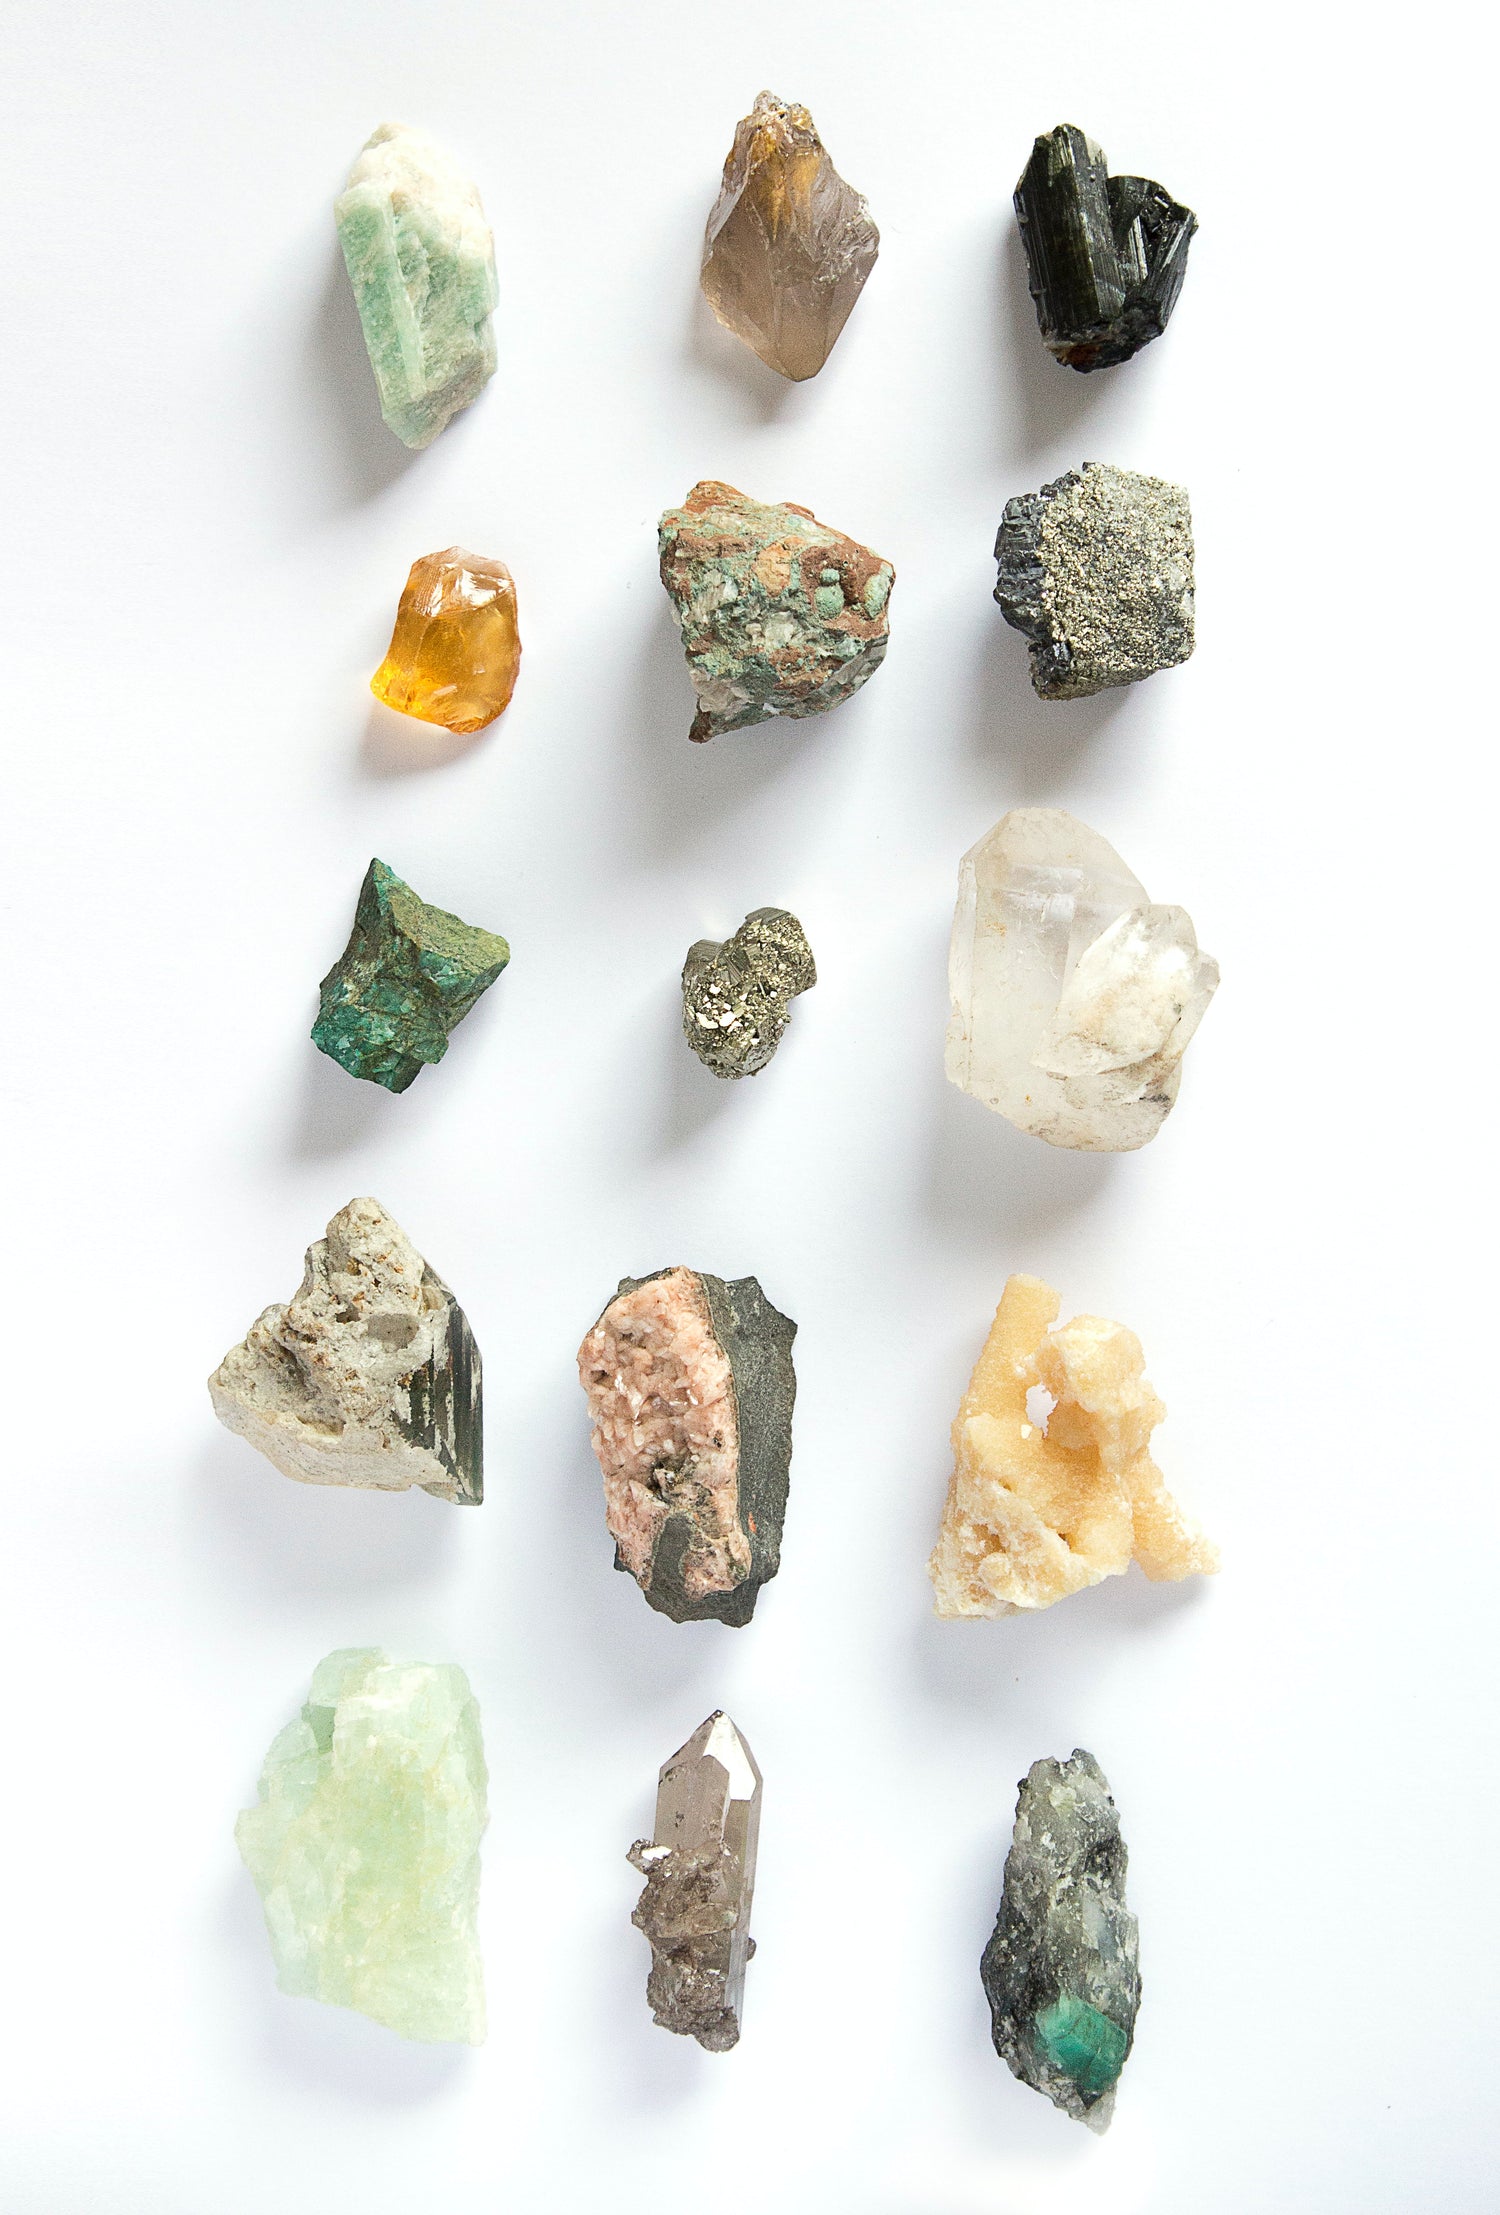 Rough gem crystals